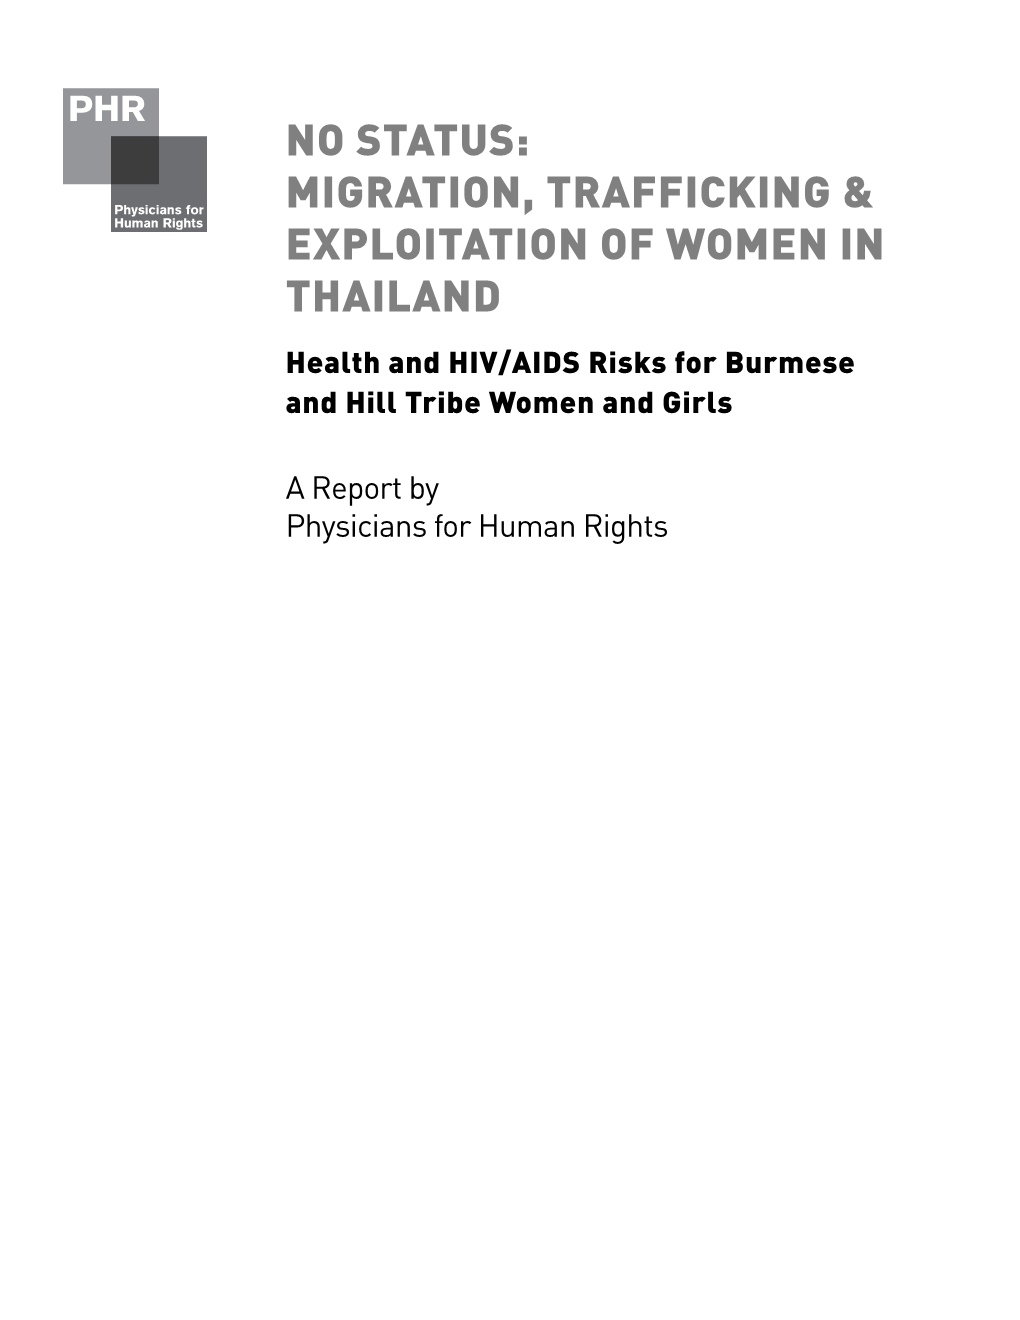 Migration, Trafficking & Exploitation of Women In